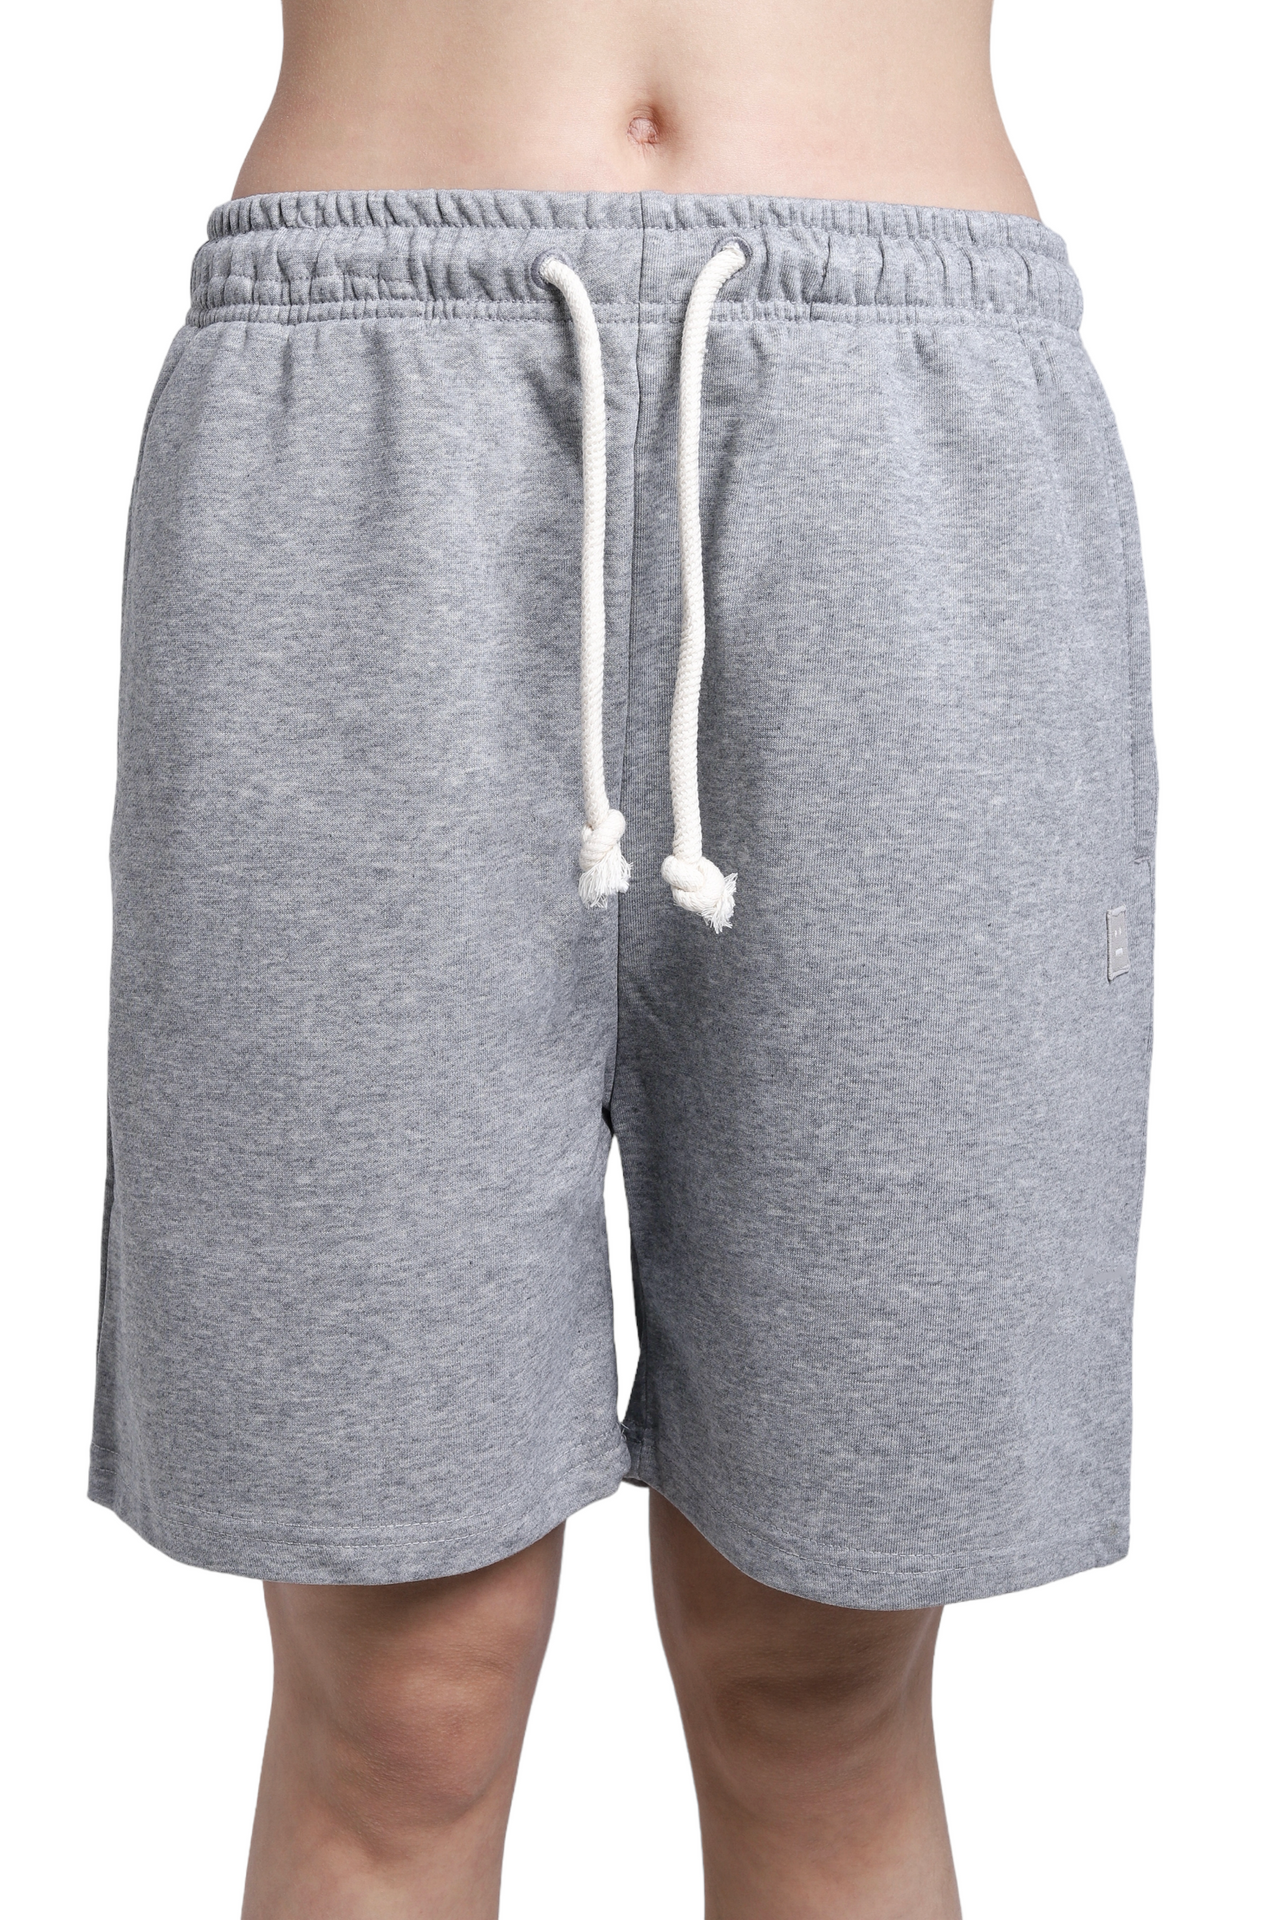 Acne Studios Fleece Shorts Light Grey Melange